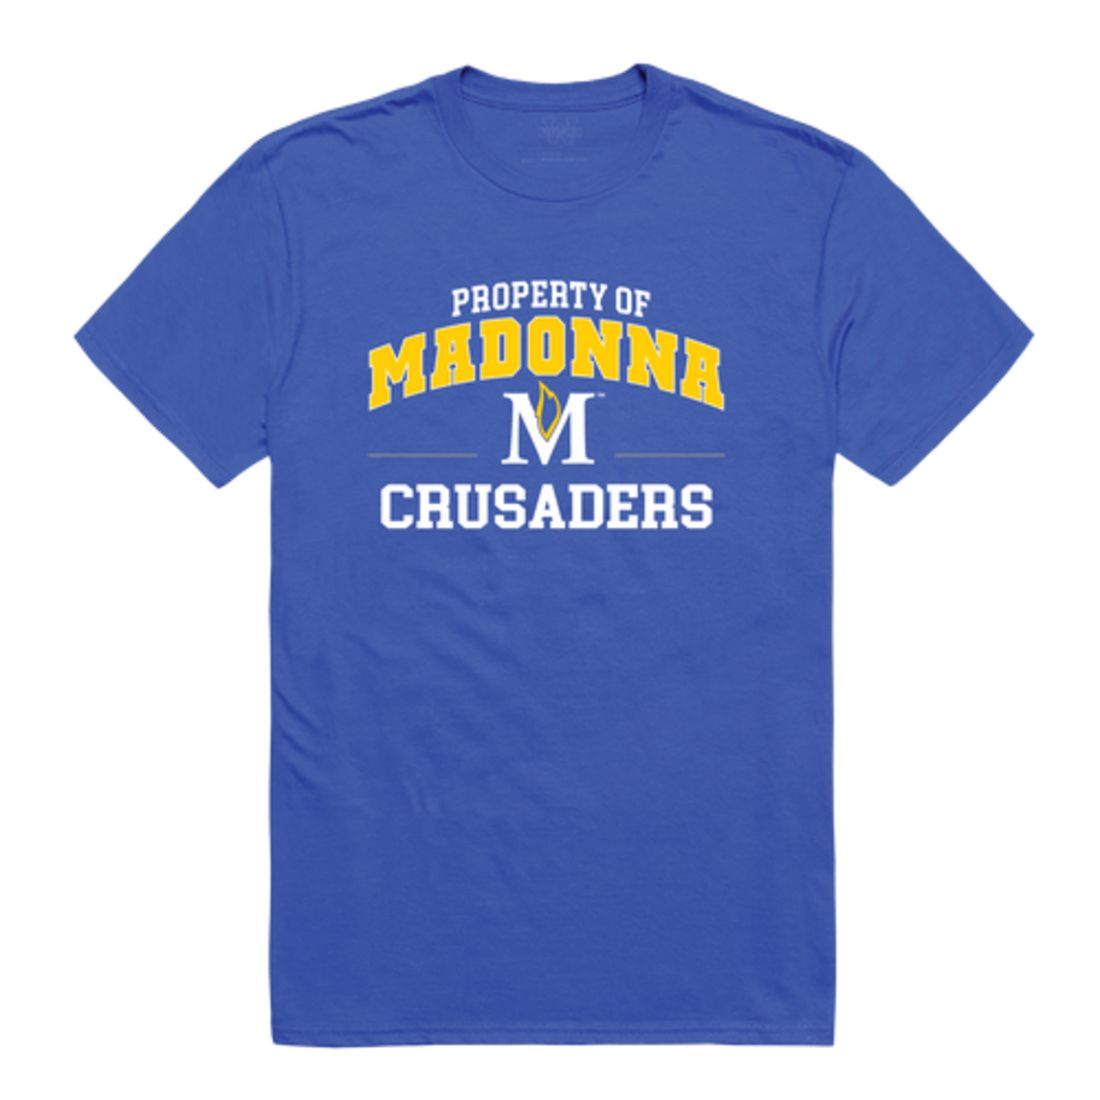 Madonna University Crusaders Property T-Shirt Tee